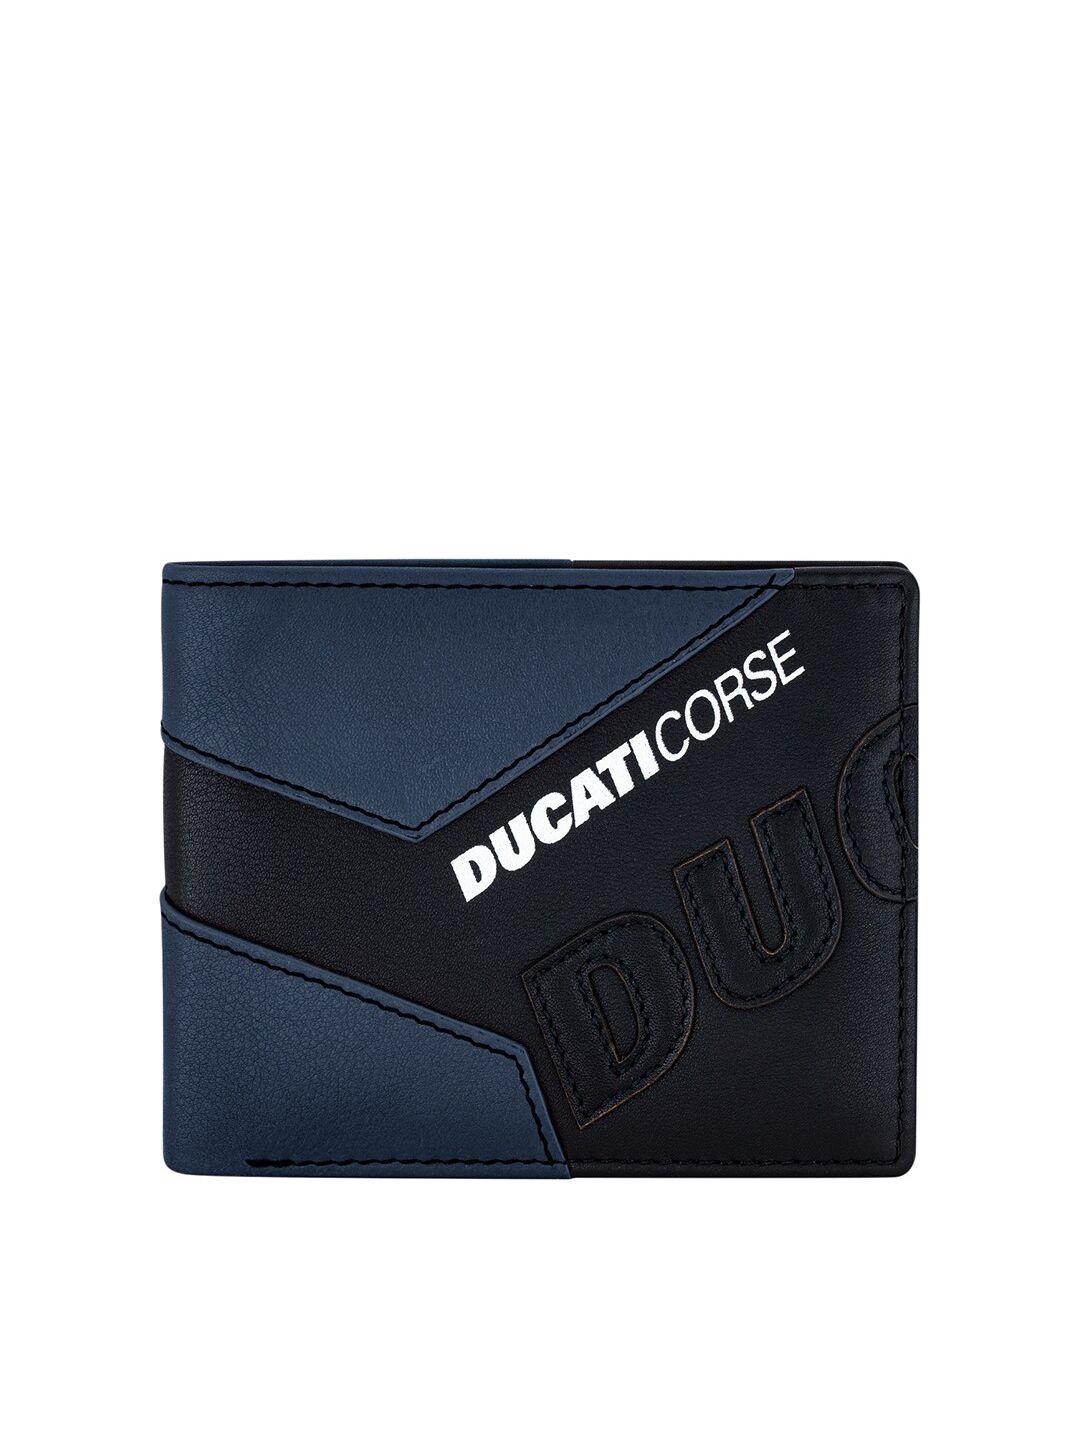 ducati corse men blue & black colourblocked leather two fold wallet